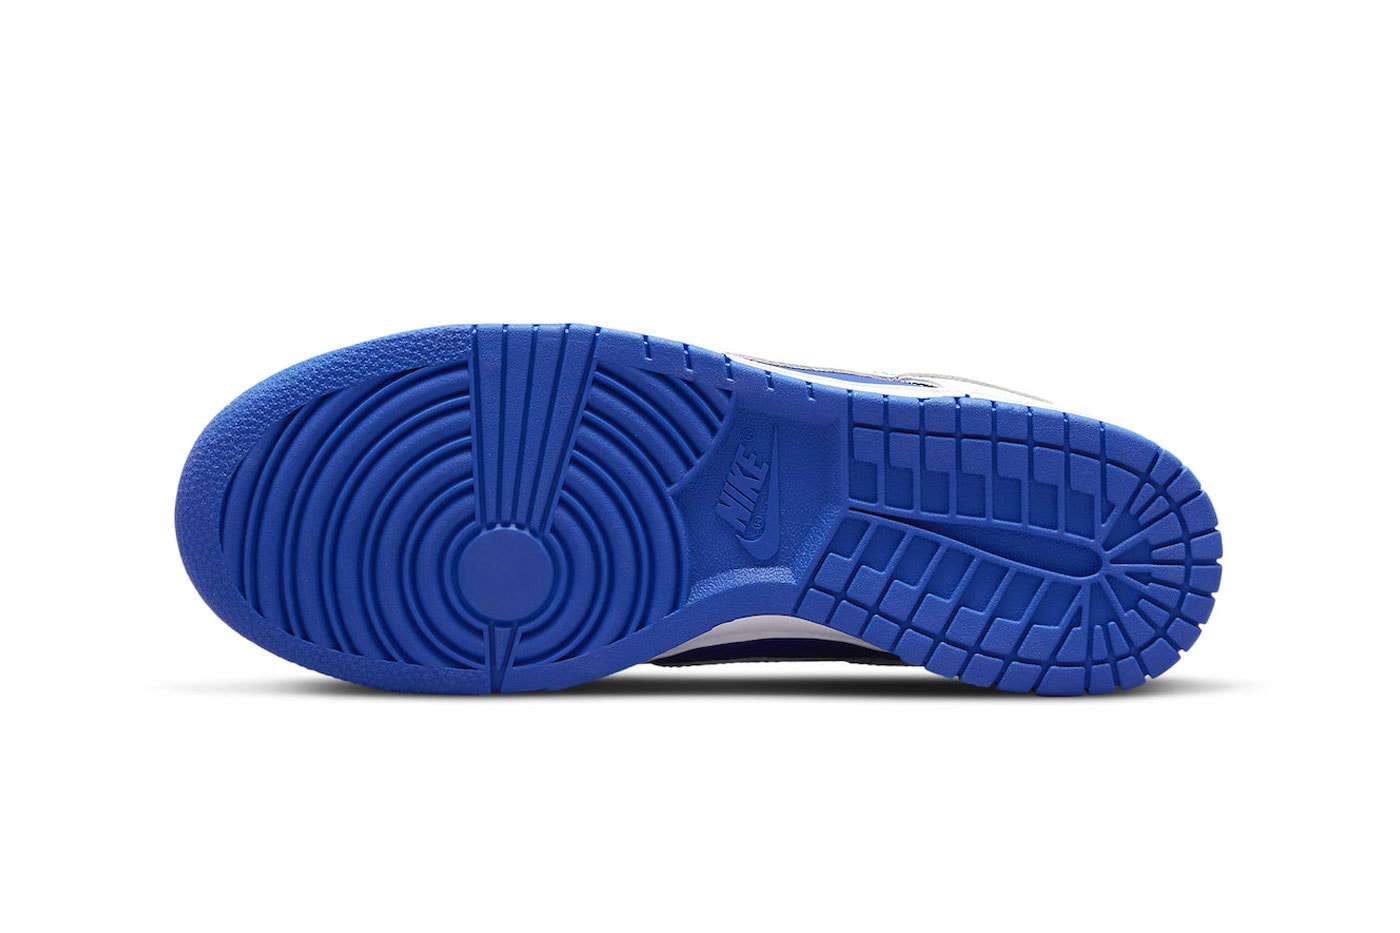 Nike Dunk Low Returns in a Dual Tone "Racer Blue" Iteration DD1391-401 sneakers skateboarding blue white crisp kentucky nike dunk low